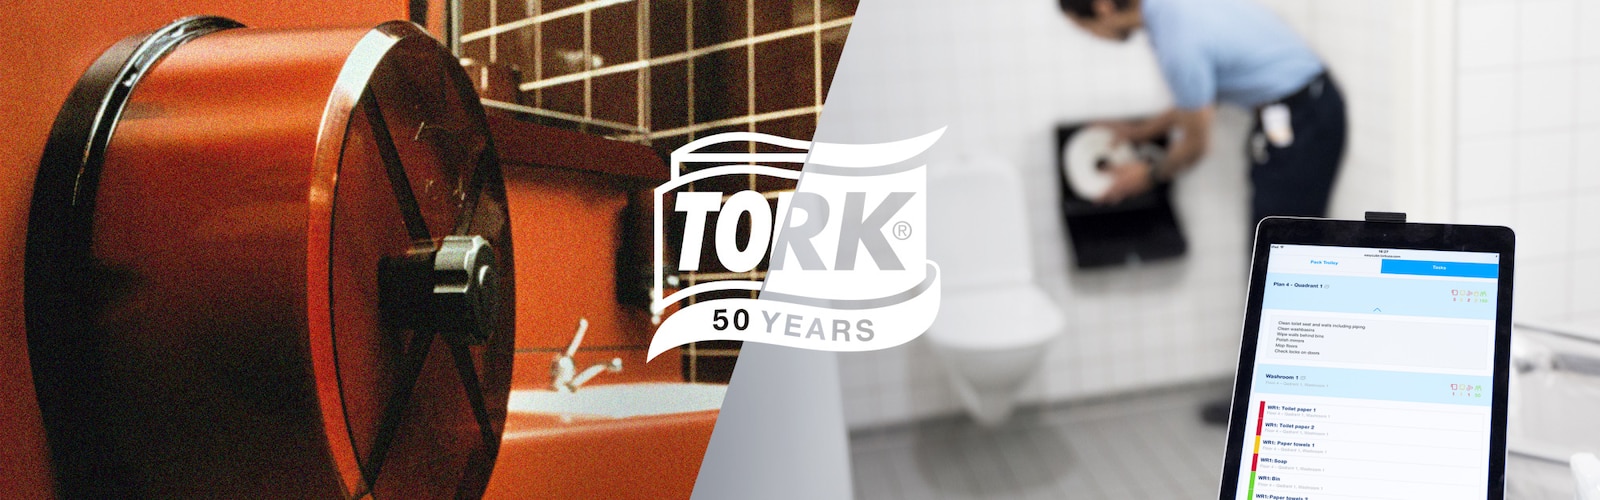 Tork 50 years